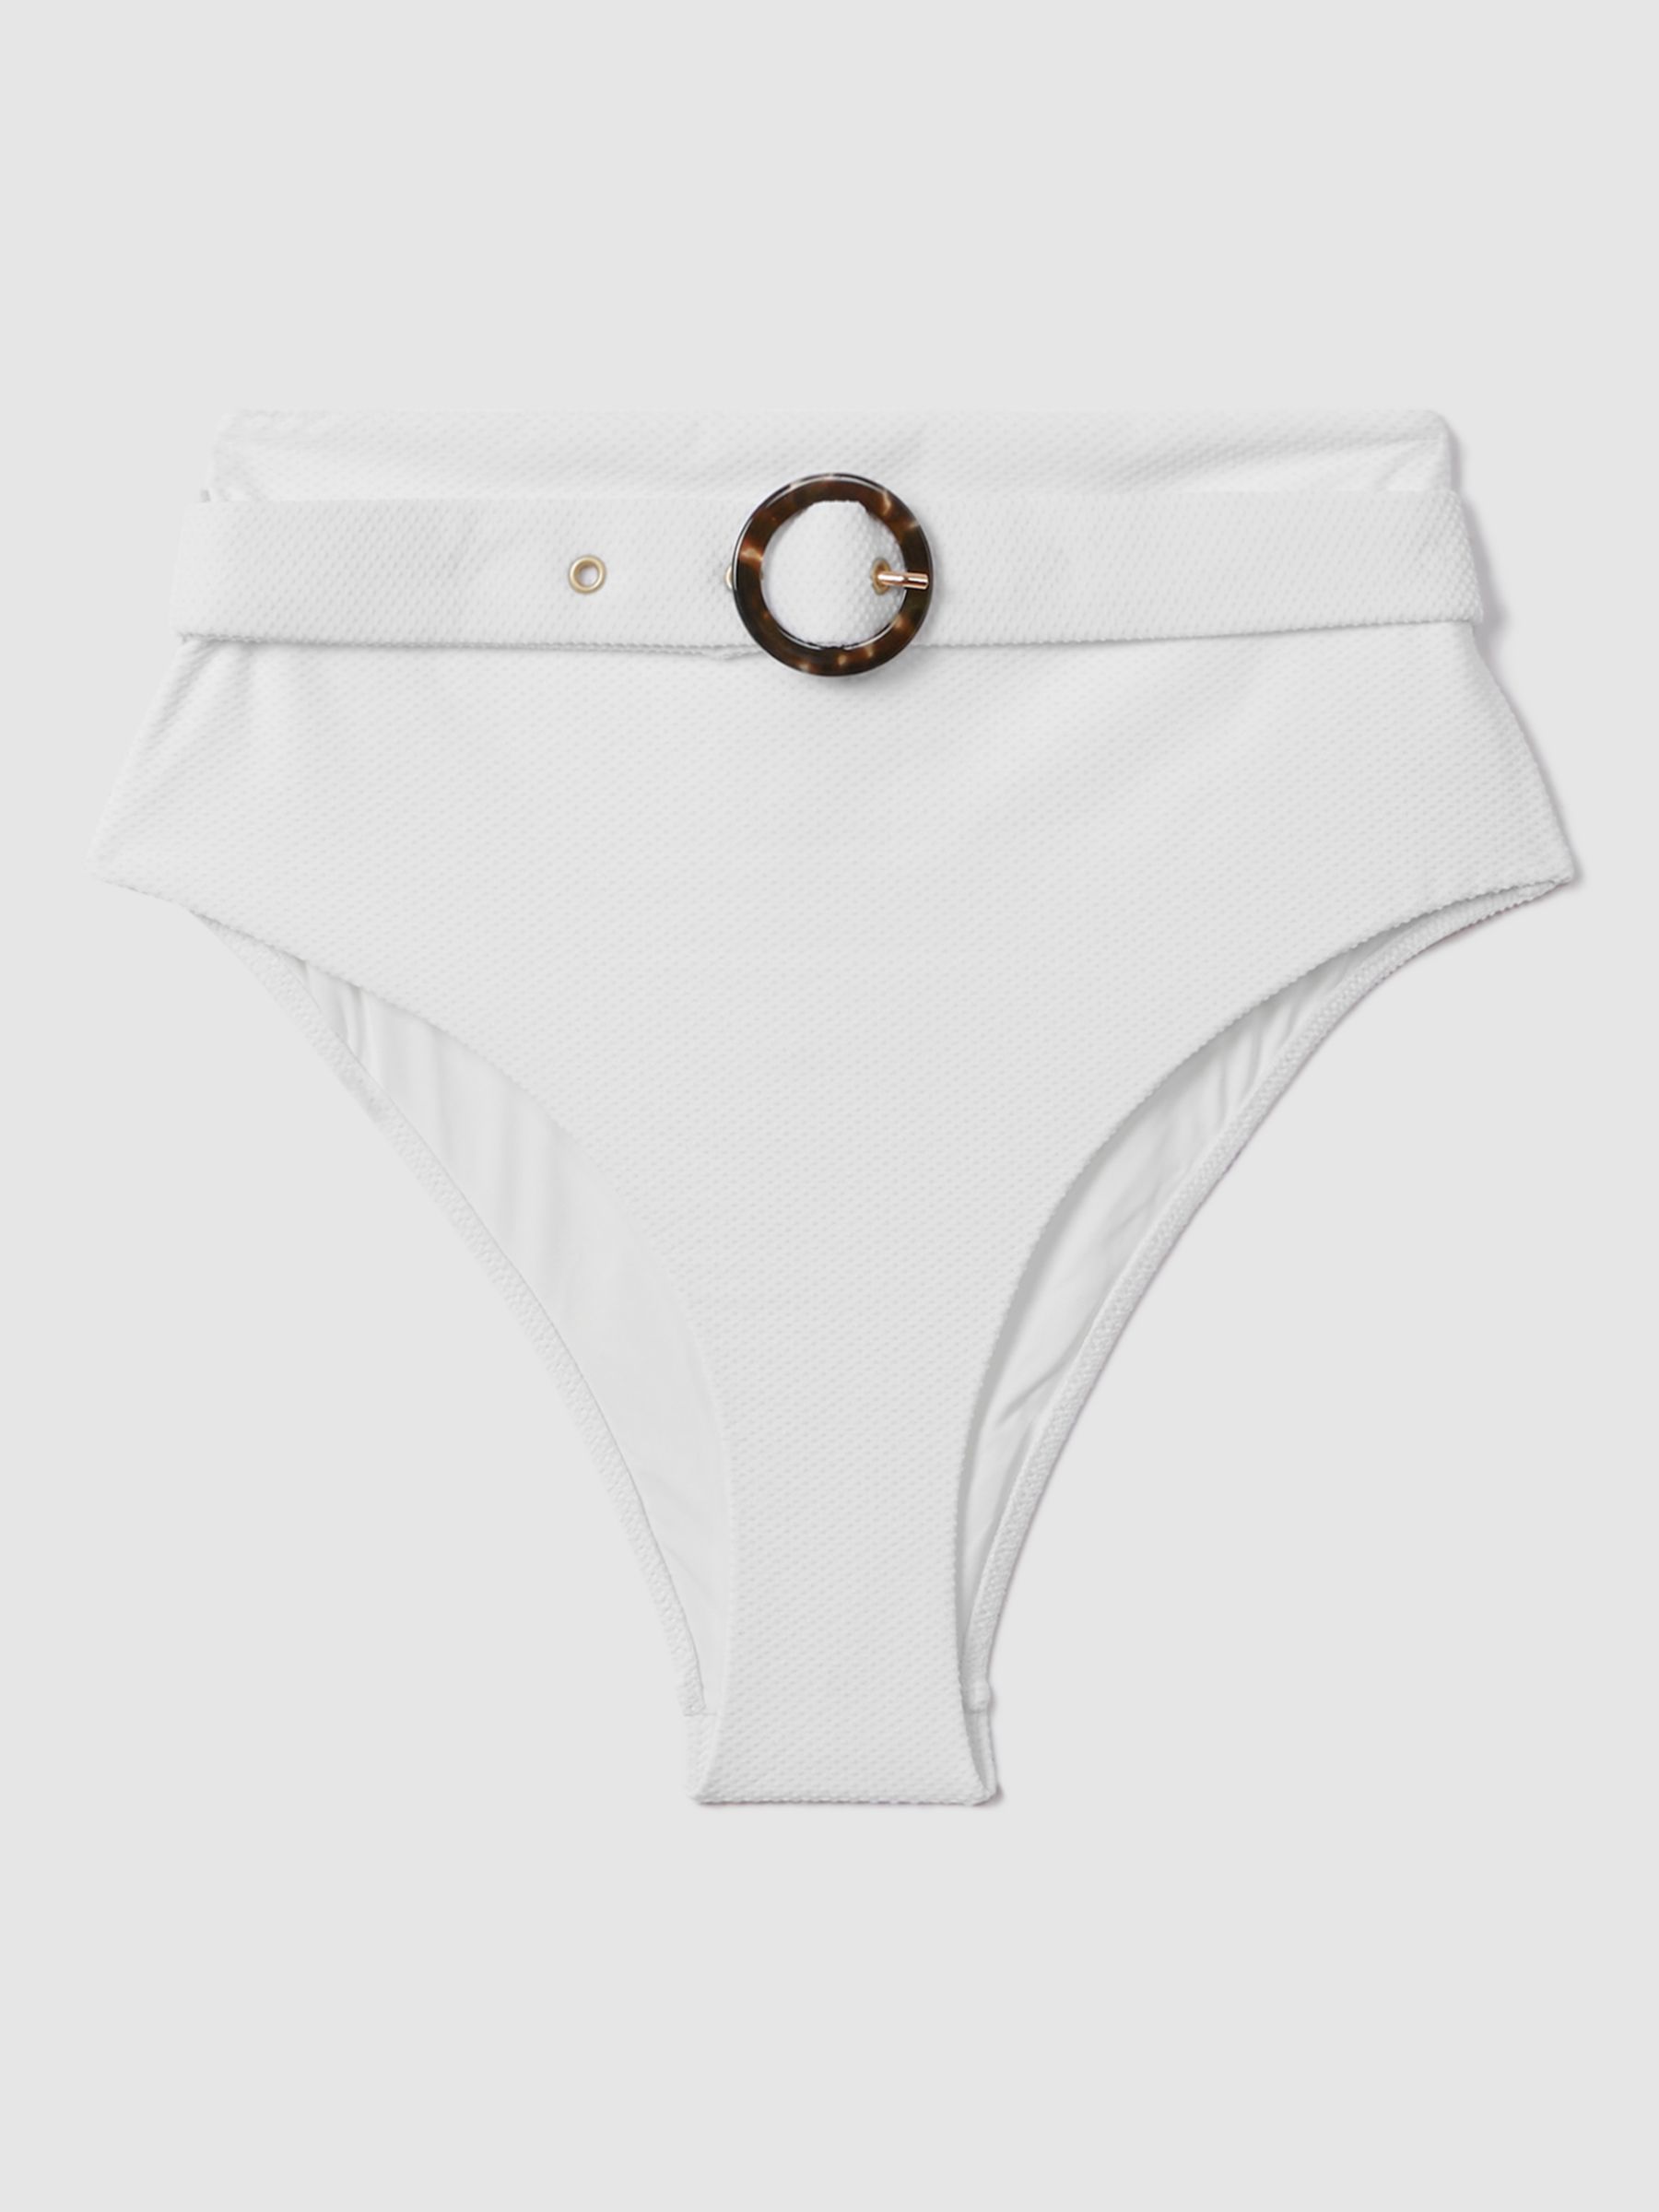 Reiss Danielle High Waist Textured Bikini Bottoms, White, 4